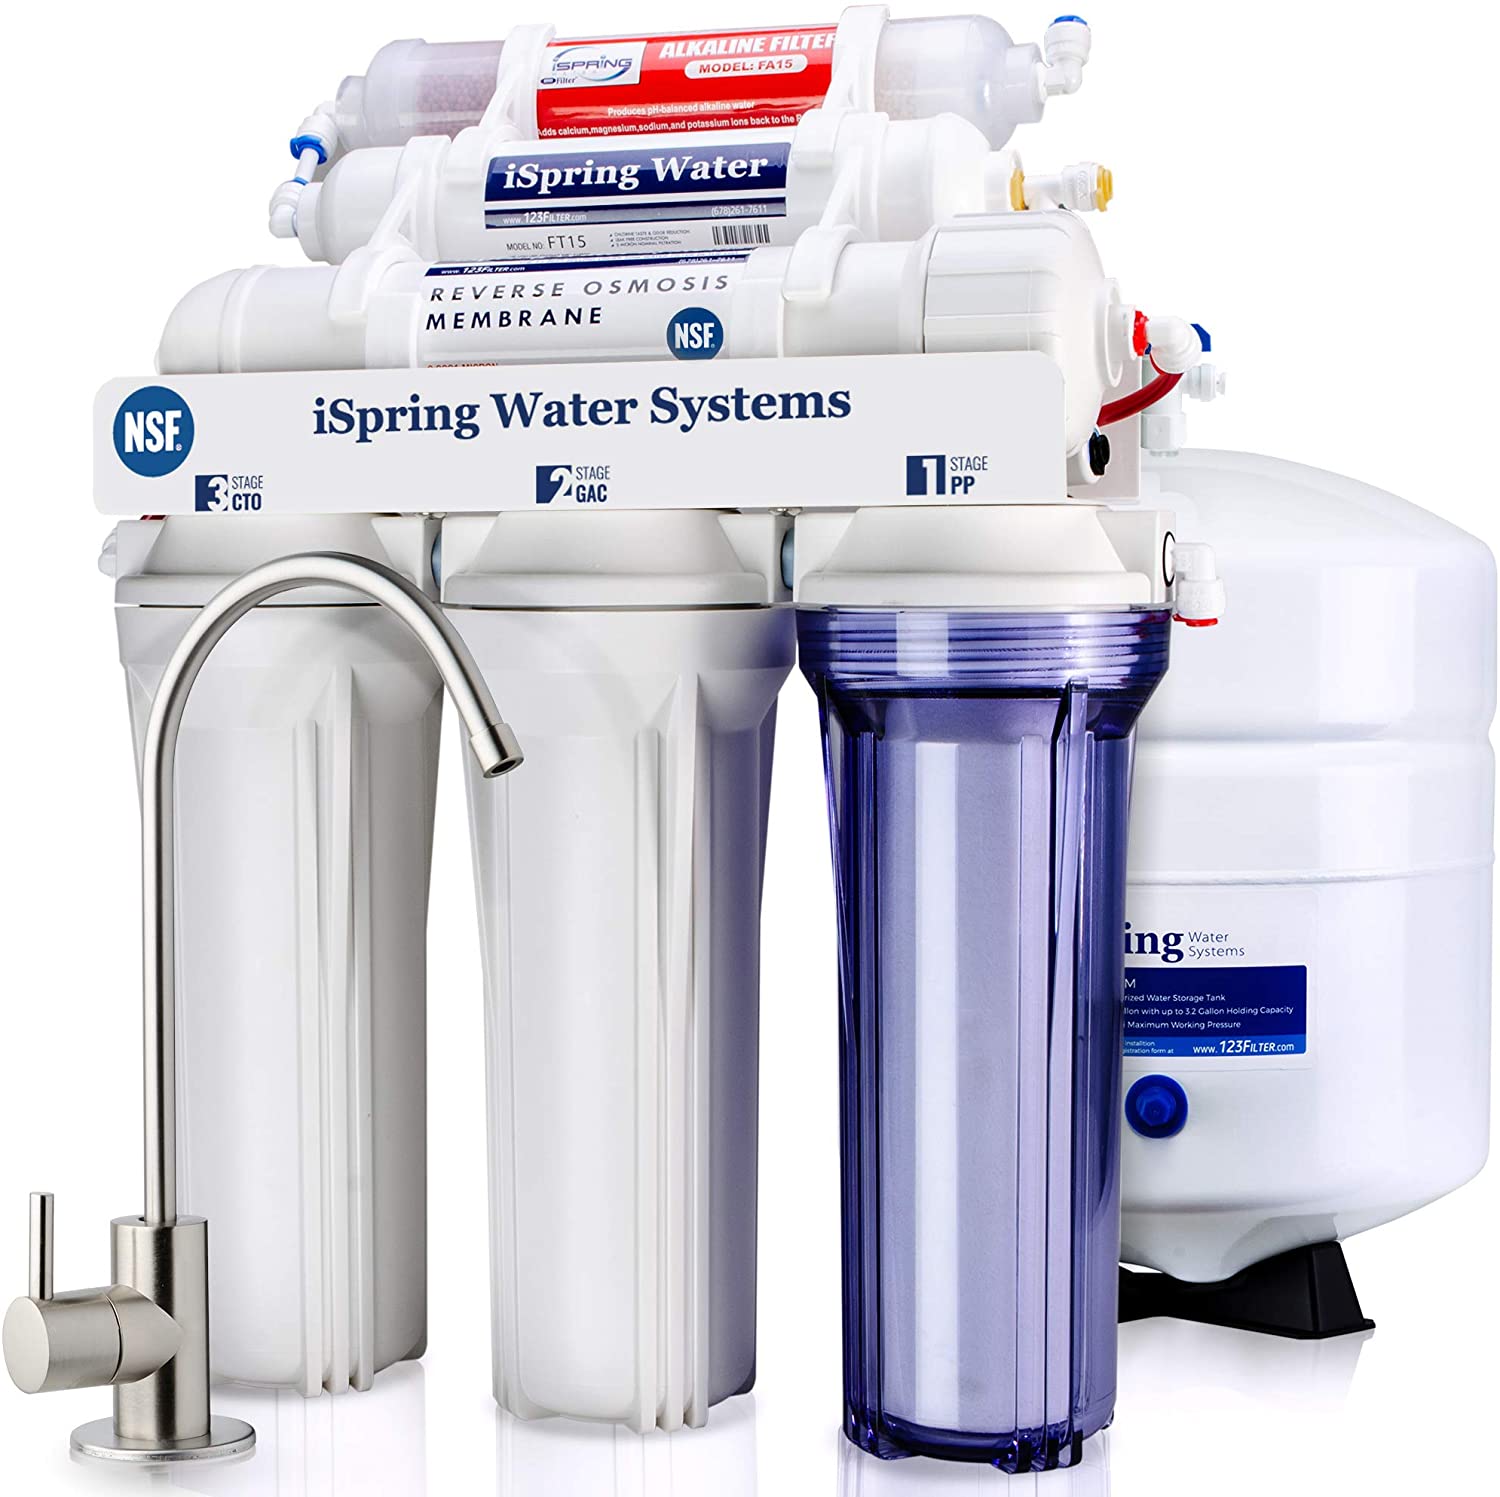 Ispring rcc7ak 6 stage drinking water filter system